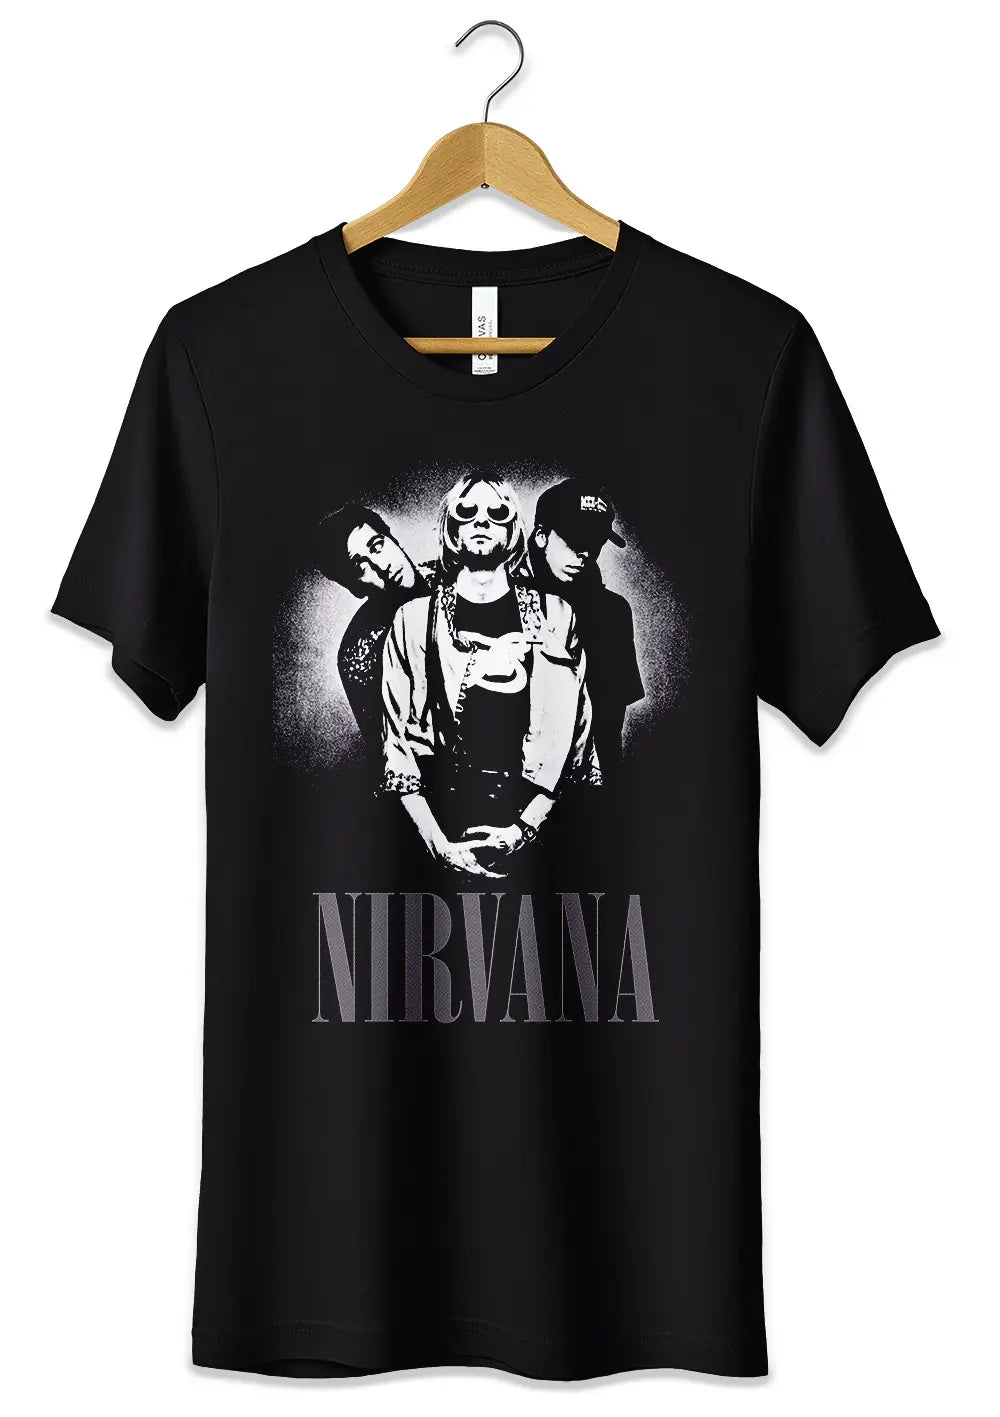 T-Shirt Maglietta Nirvana Kurt Cobain Dave Grohl Novoselic, CmrDesignStore, T-Shirt, T-Shirt Maglietta Nirvana Kurt Cobain Dave Grohl Novoselic